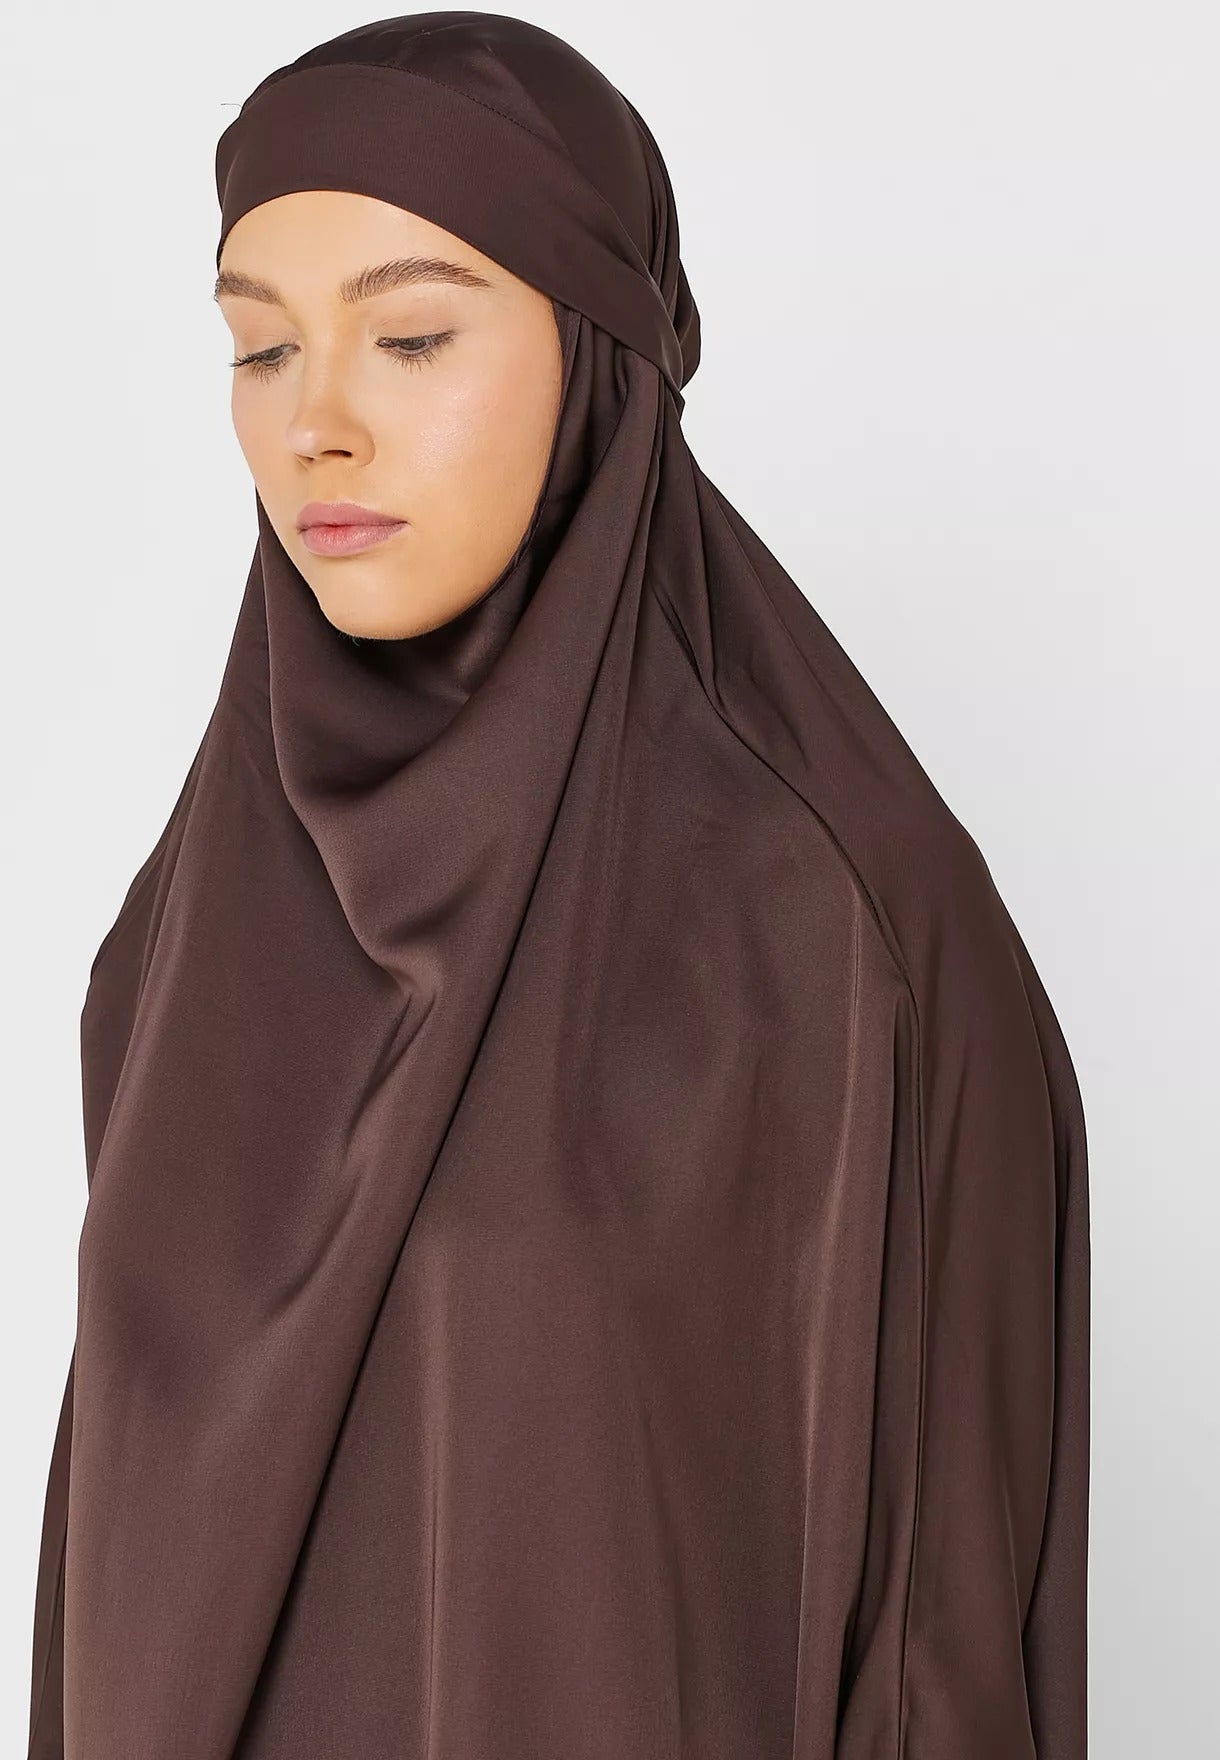 Premium full coverage islamic clothing-N21P-N21P